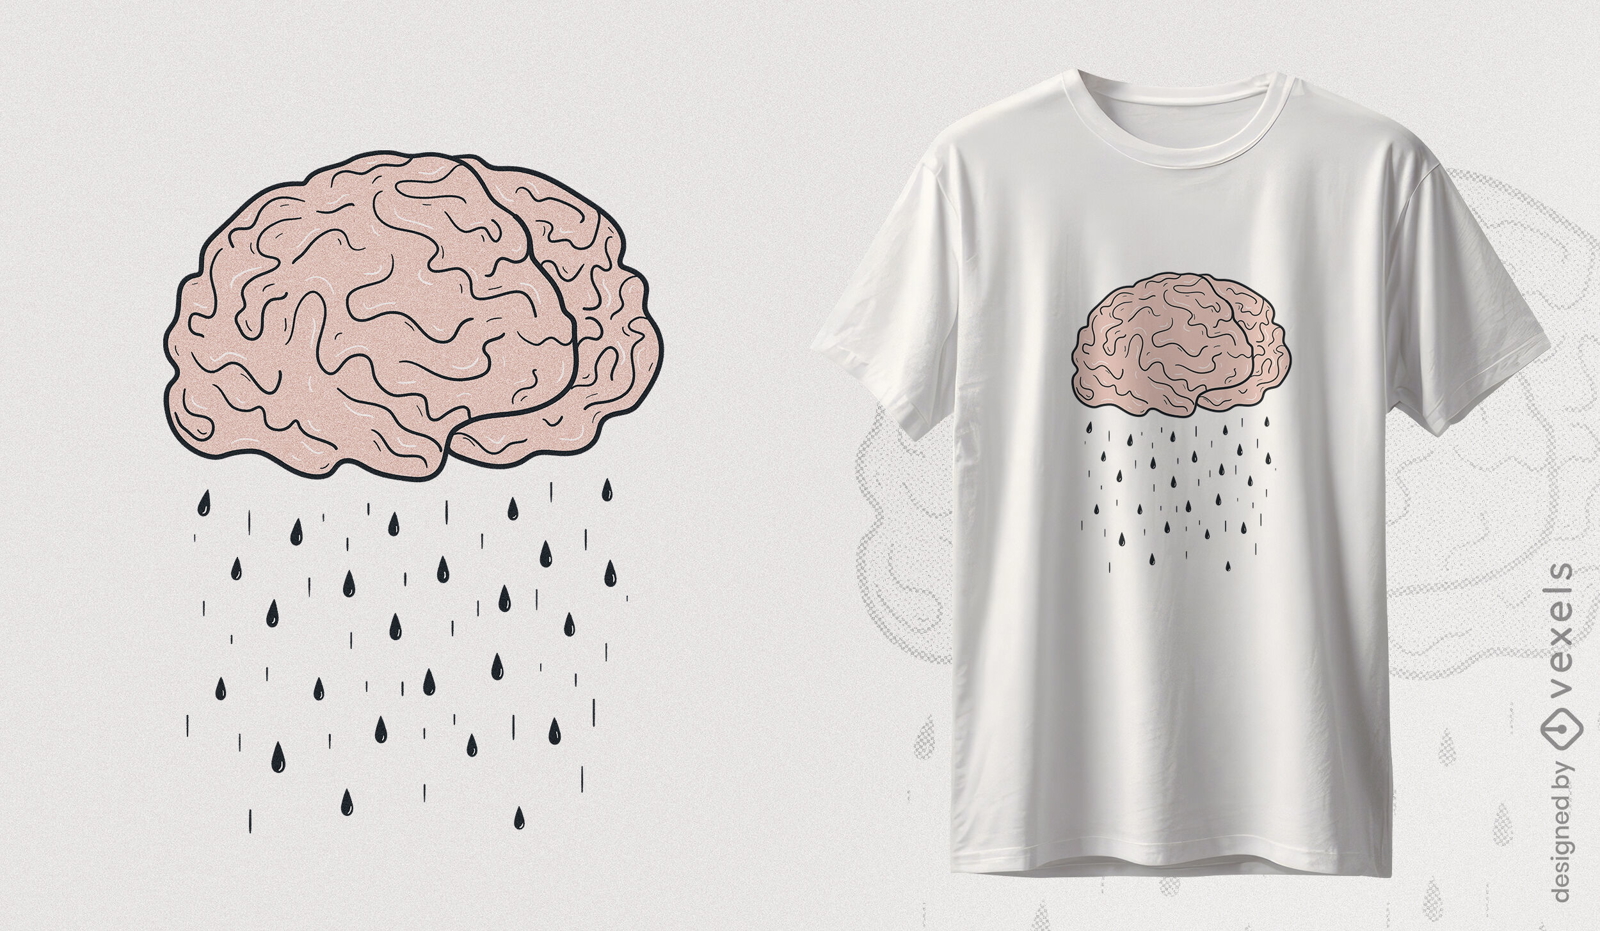 Diseño de camiseta de lluvia de lluvia de ideas.